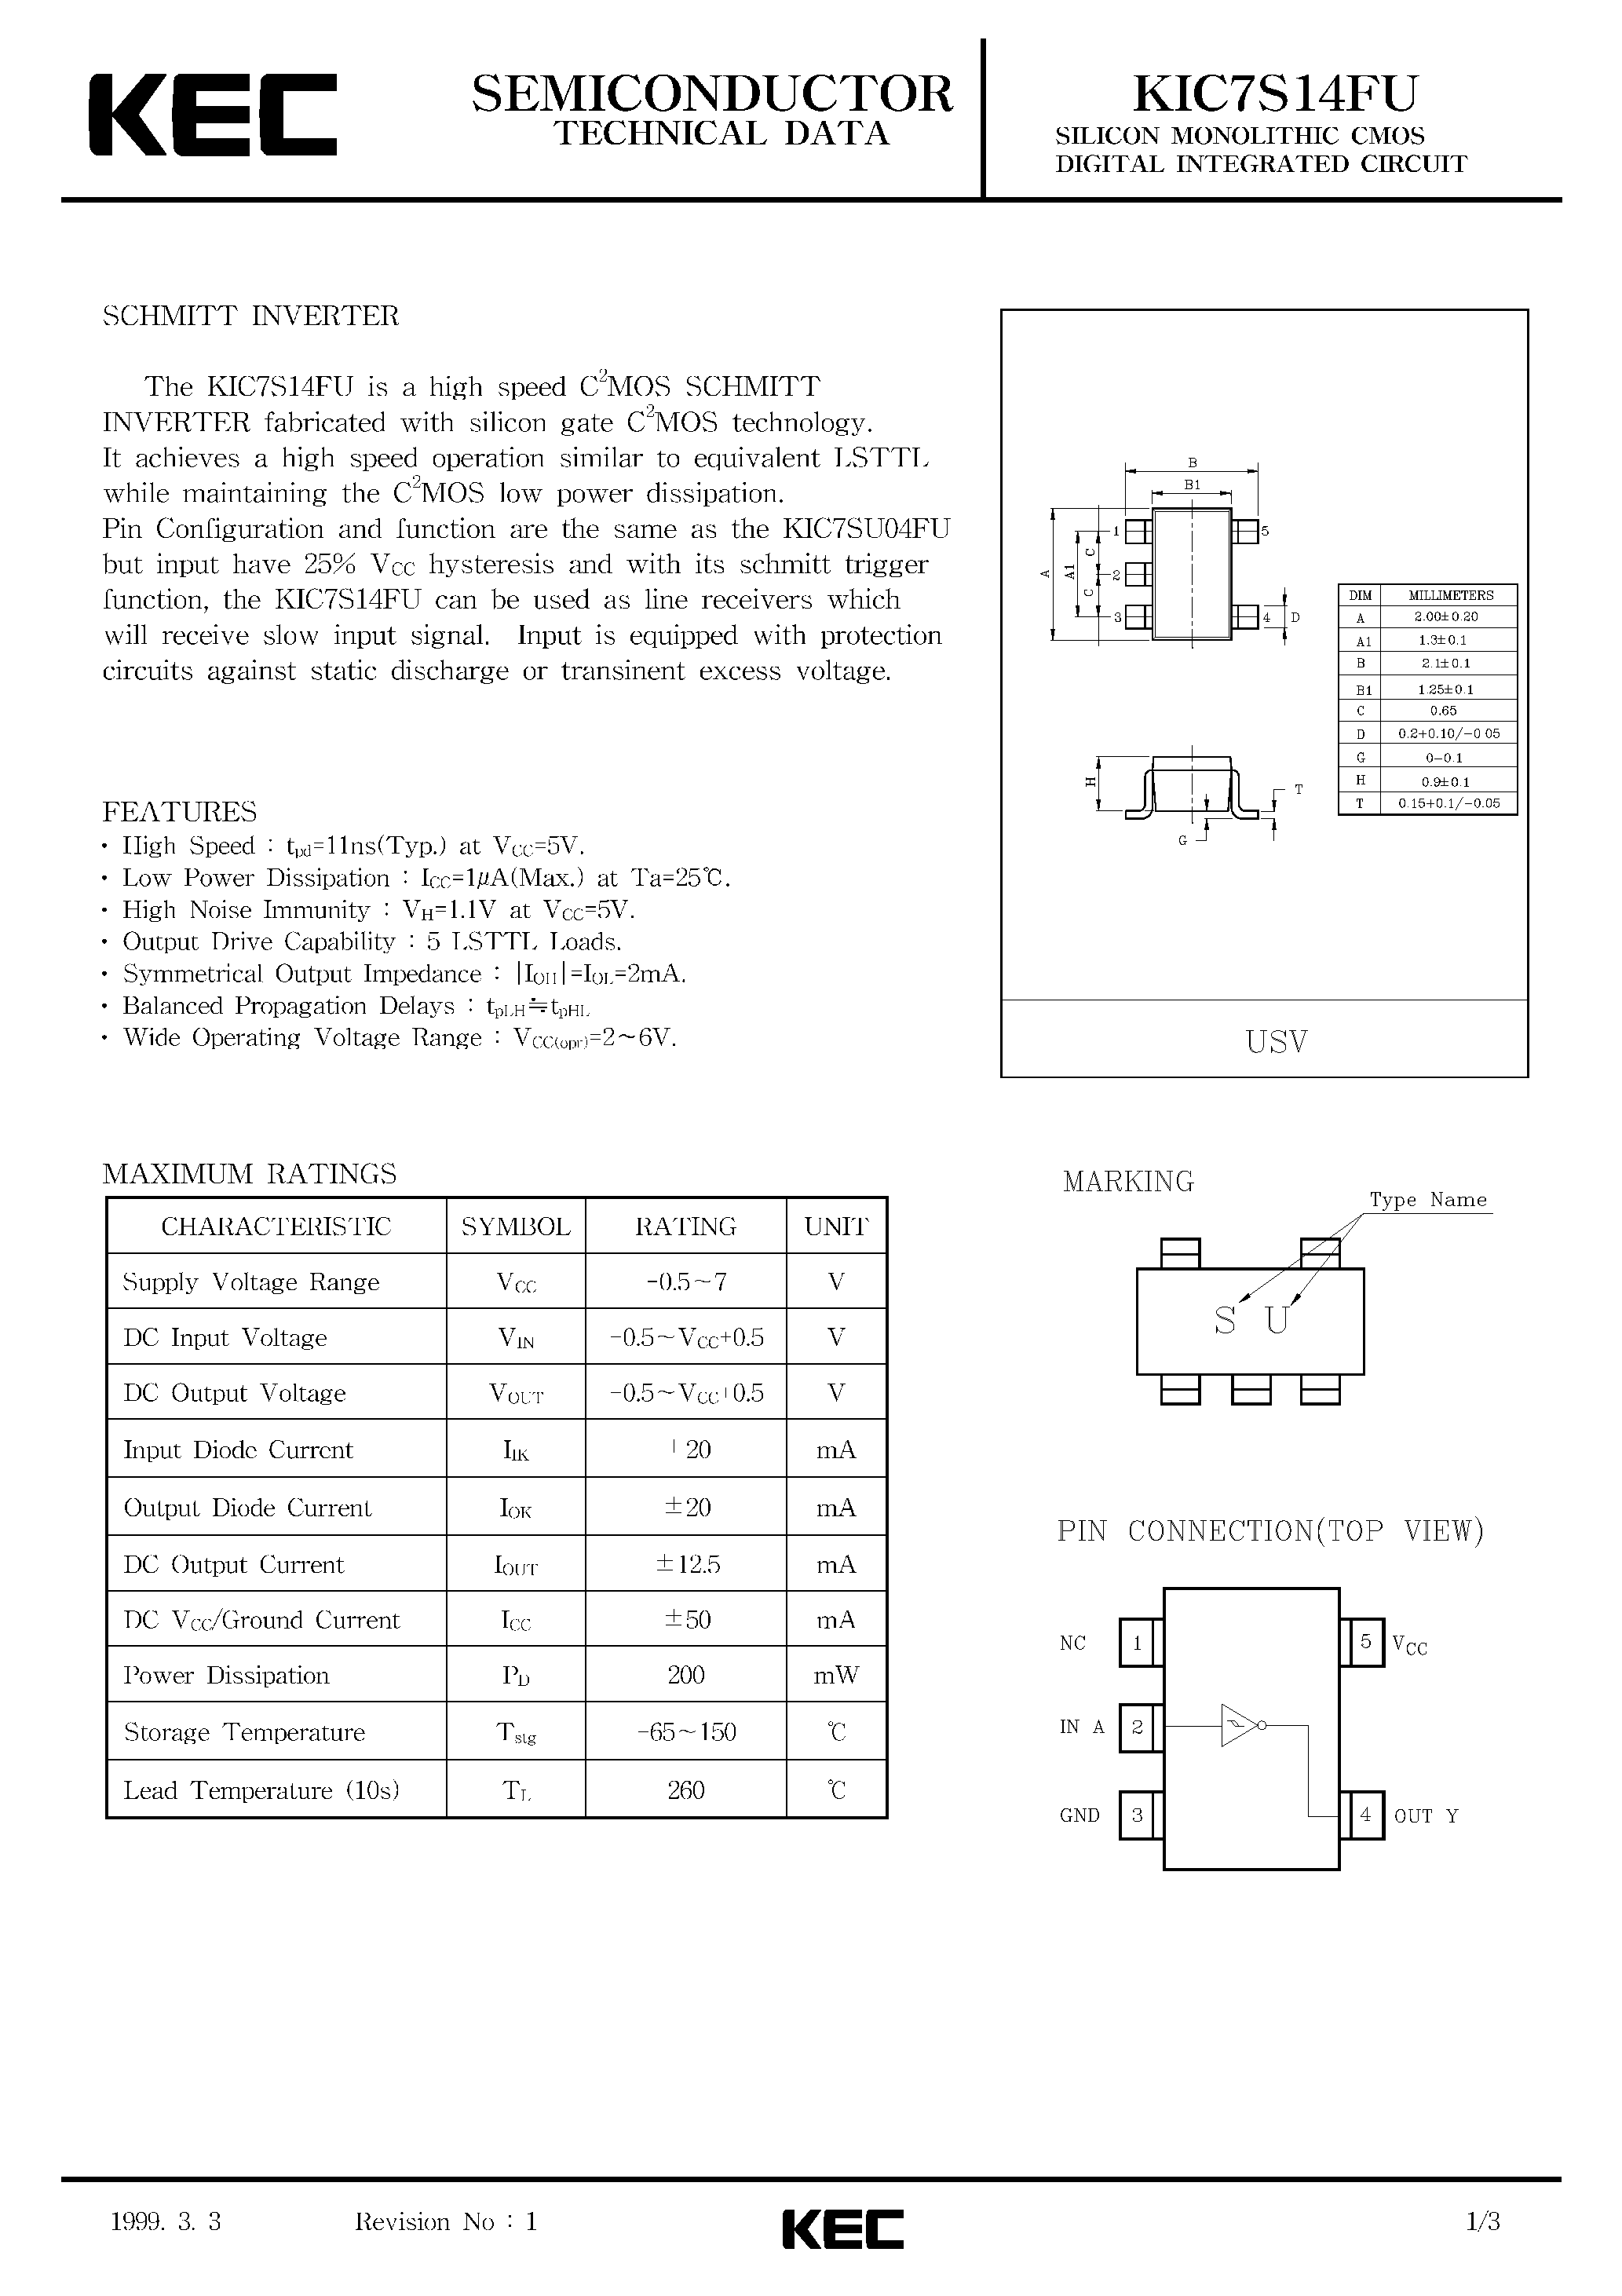 Datasheet KIC7S14FU - SILICON MONOLITHIC CMOS DIGITAL INTEGRATED CIRCUIT (SCHMITT INVERTER) page 1